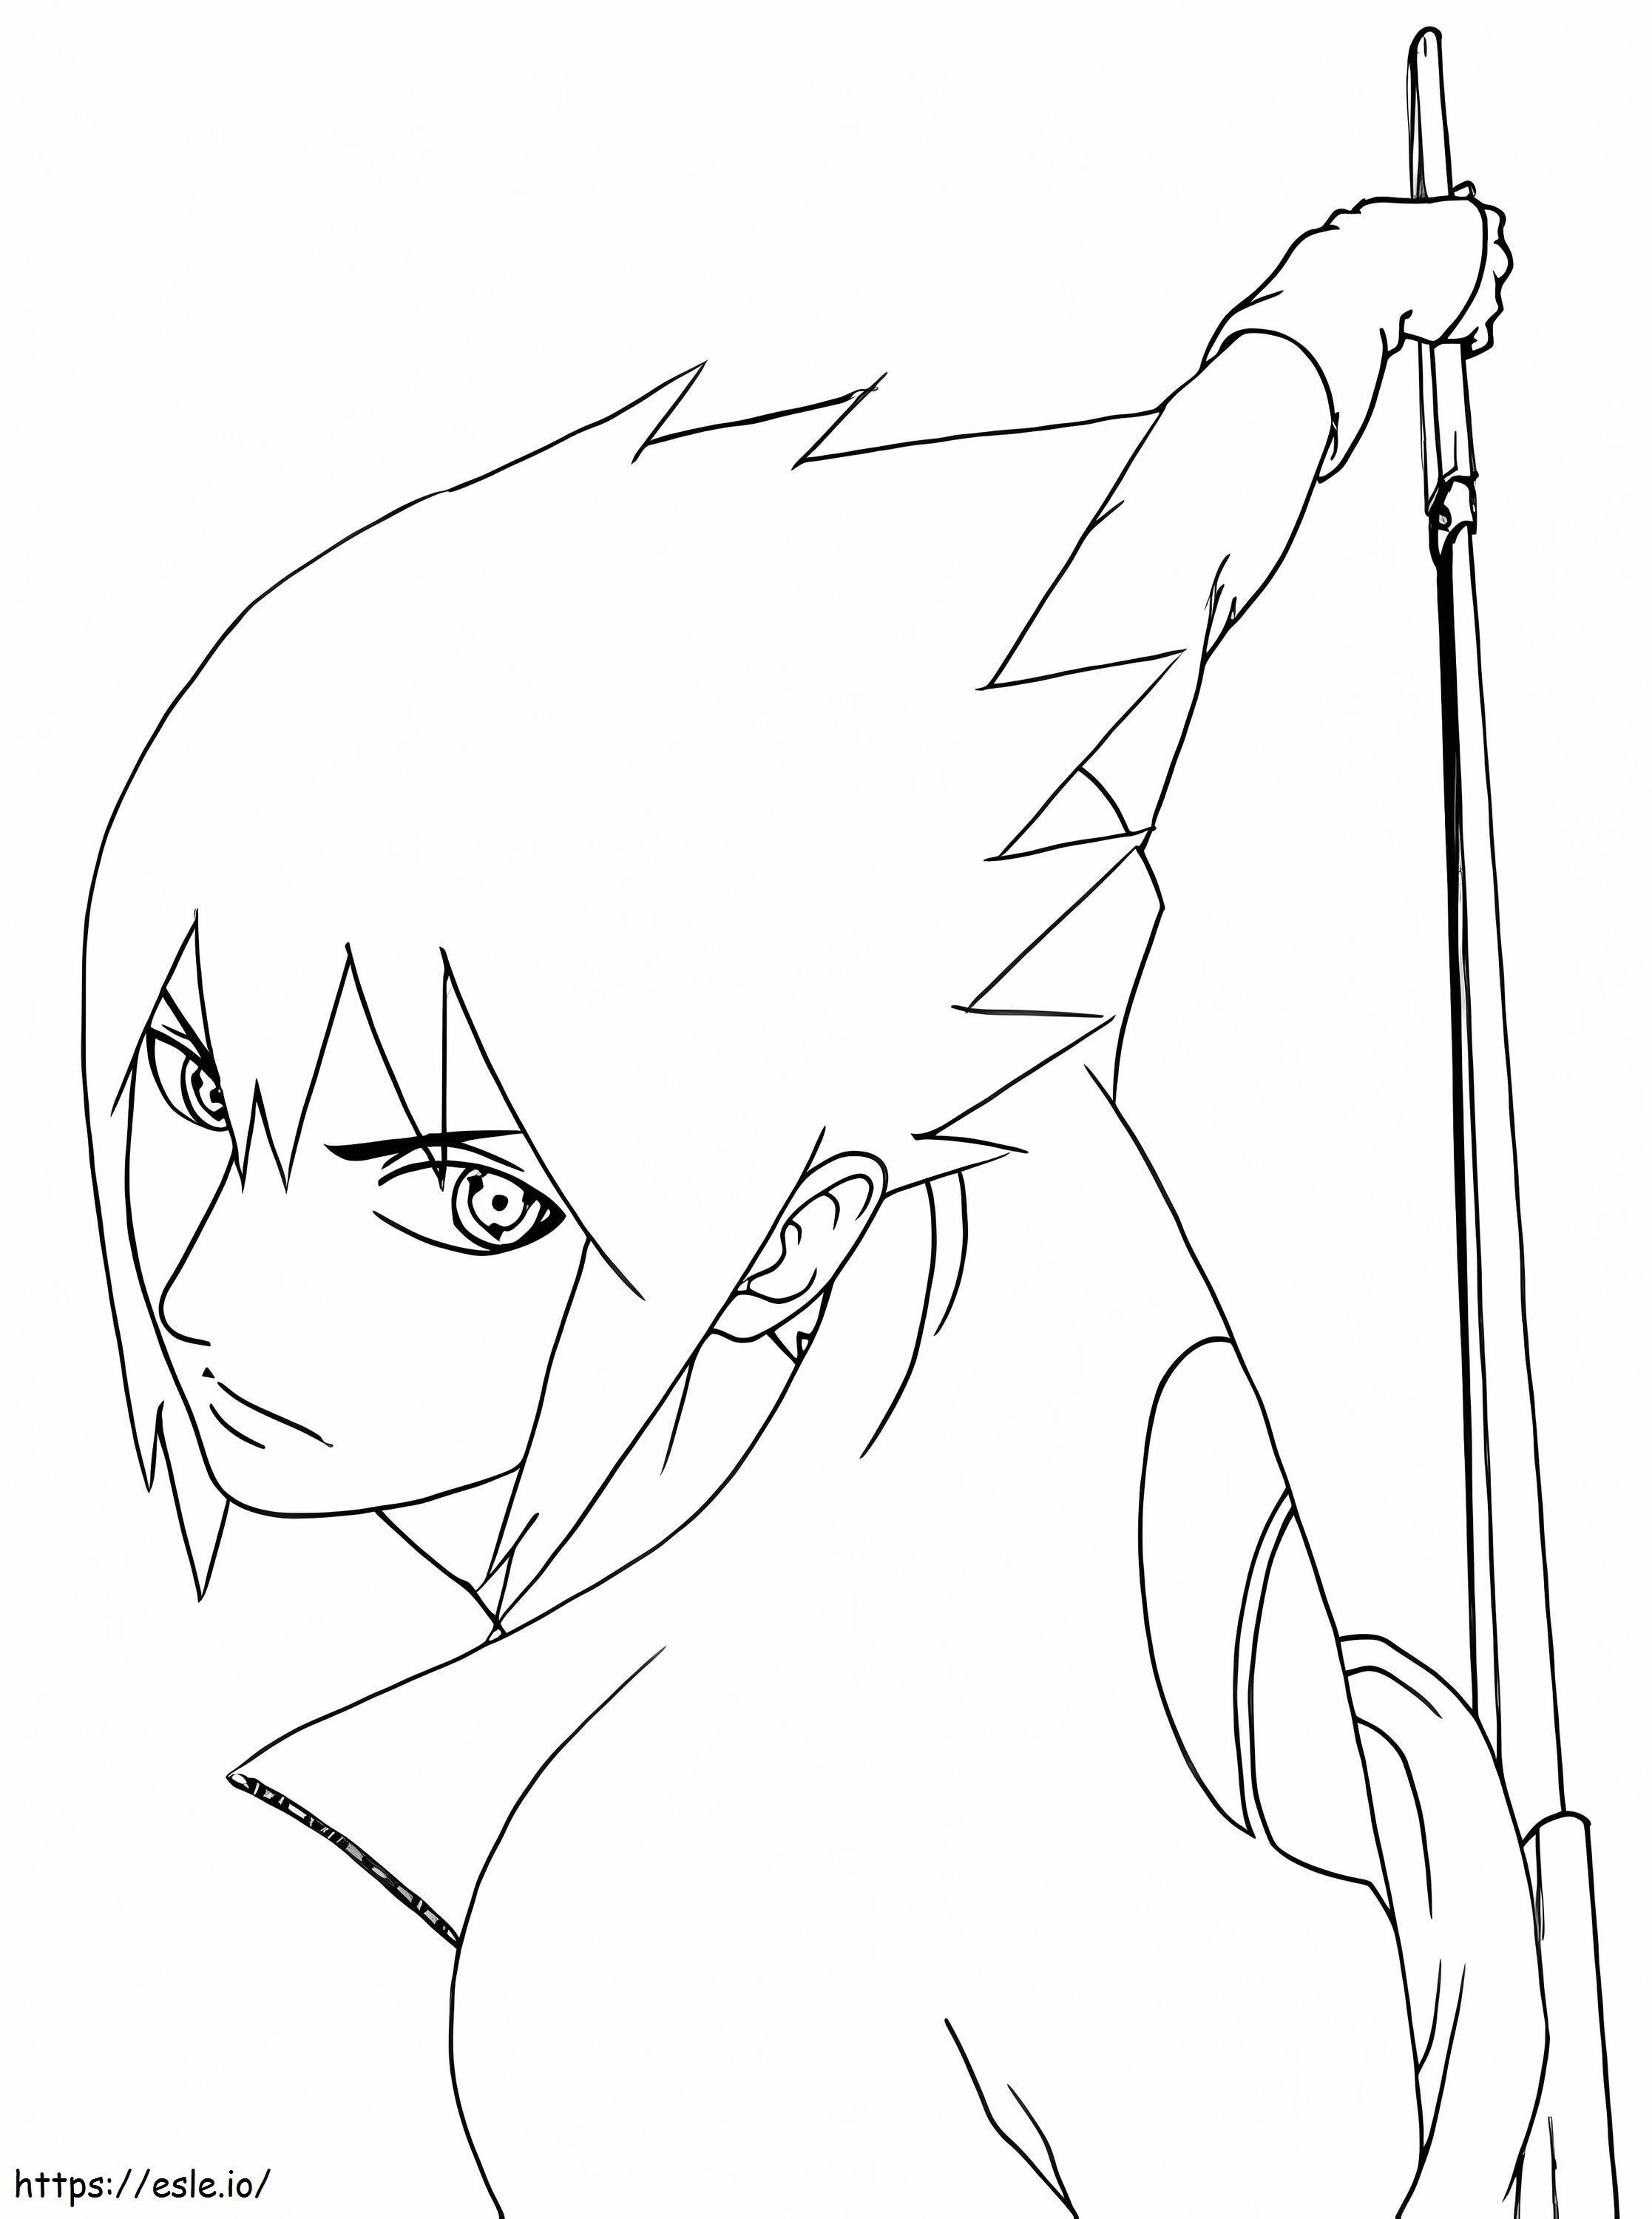 Coloriage Sasuke De Naruto à imprimer dessin